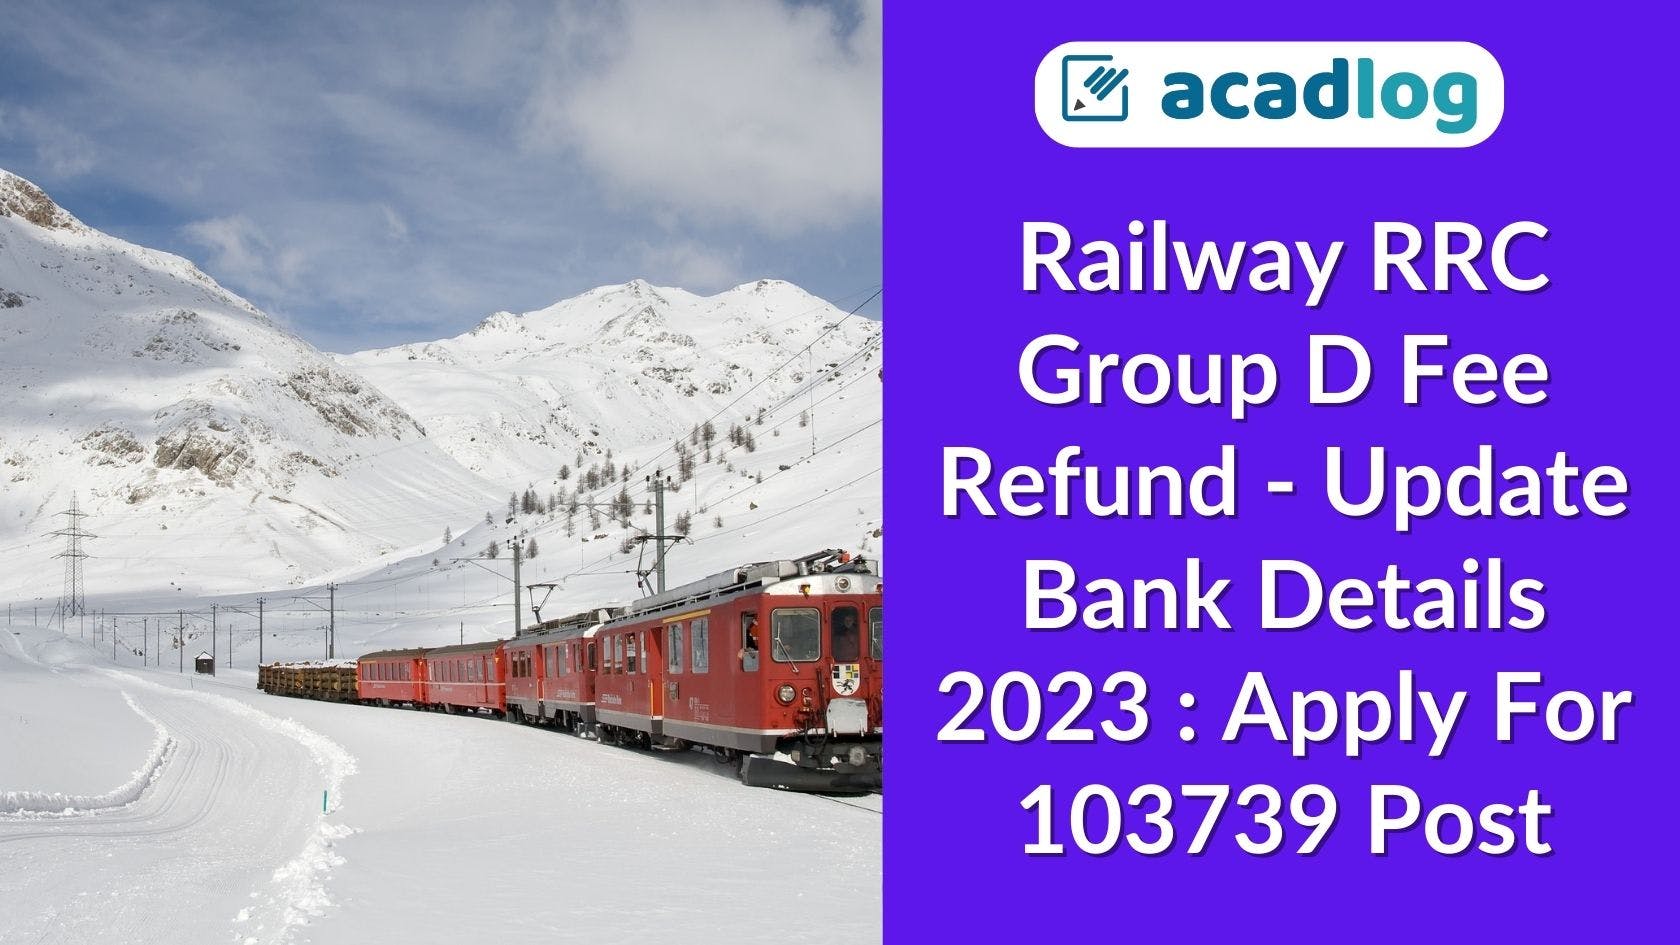 Acadlog: Railway RRC Group D Fee Refund - Bank Account Details Update Link